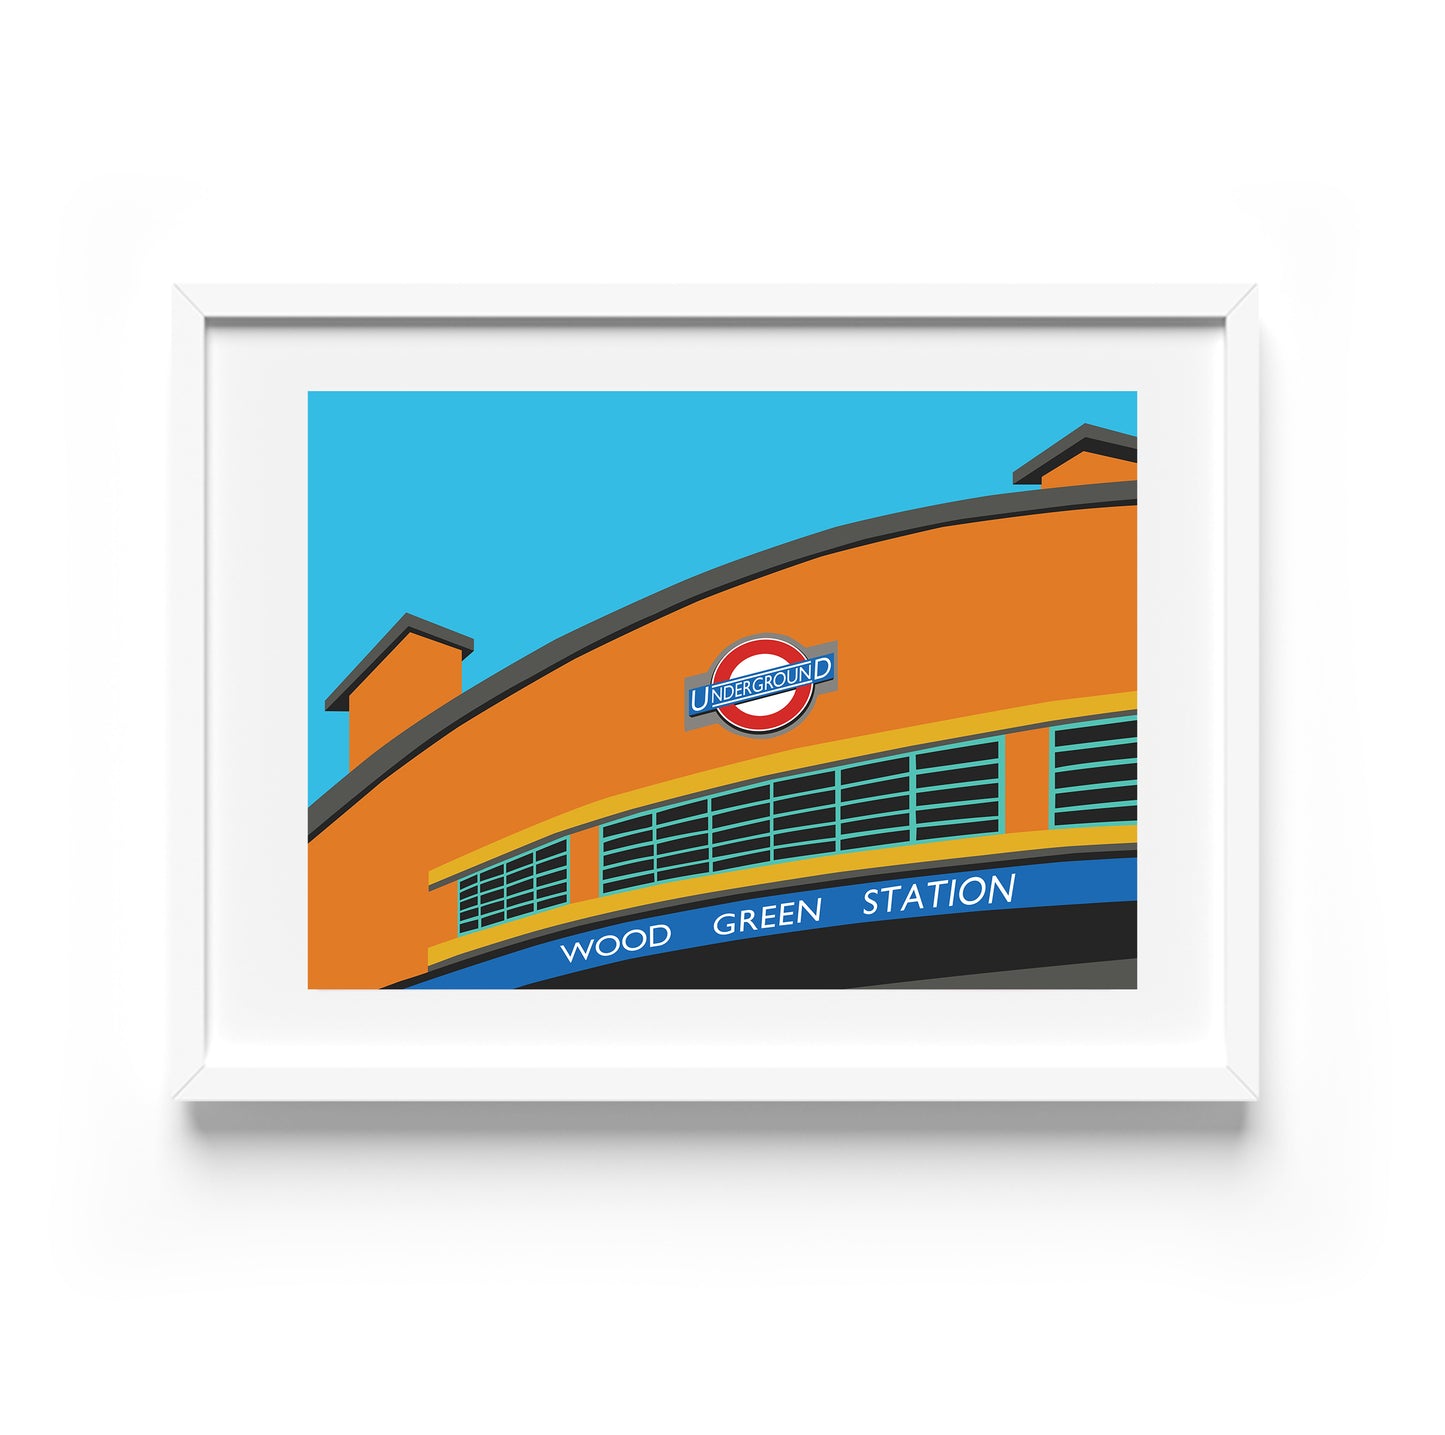 London Underground - Wood Green Station